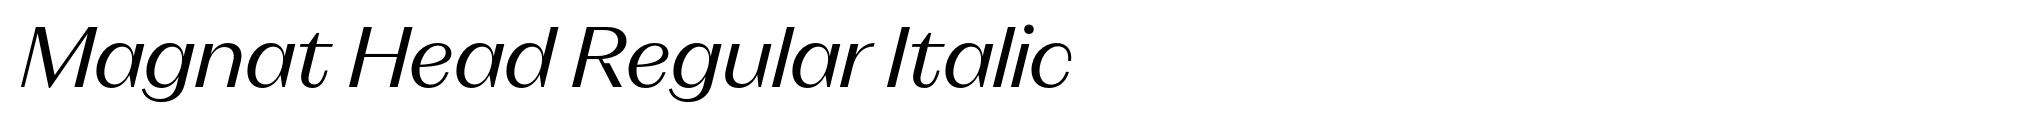 Magnat Head Regular Italic image